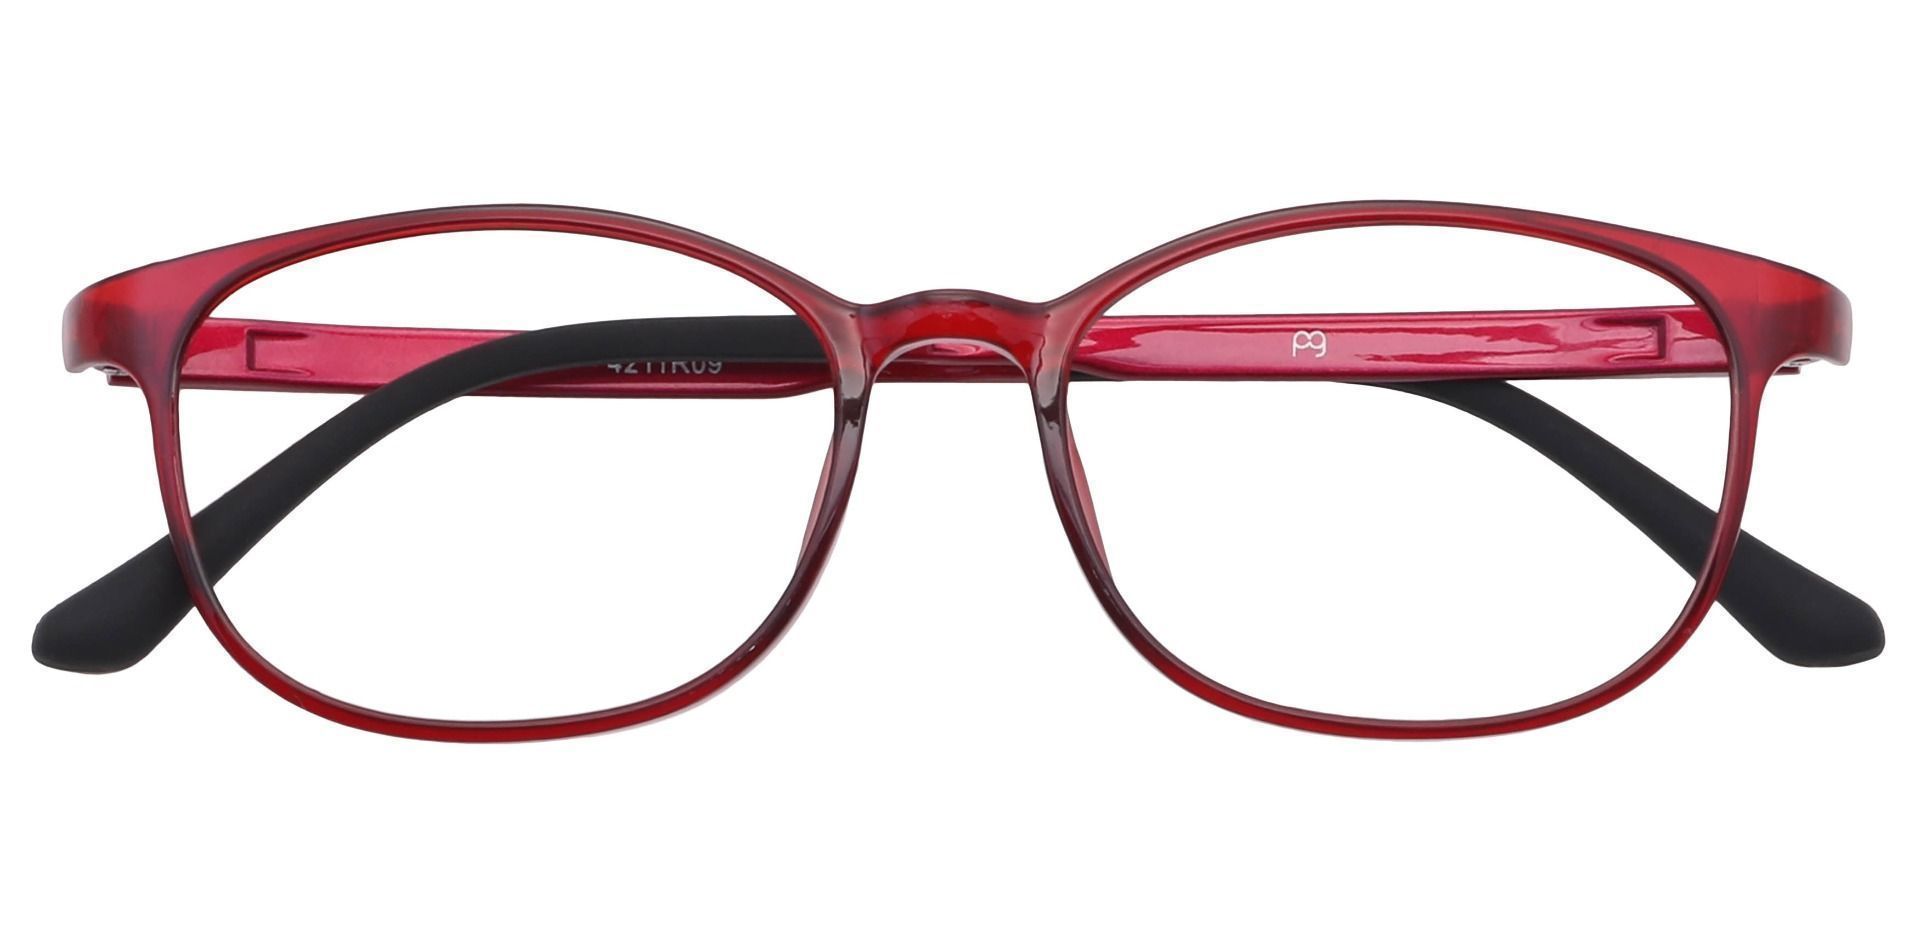 Sherry Oval Eyeglasses Frame - Red Crystal